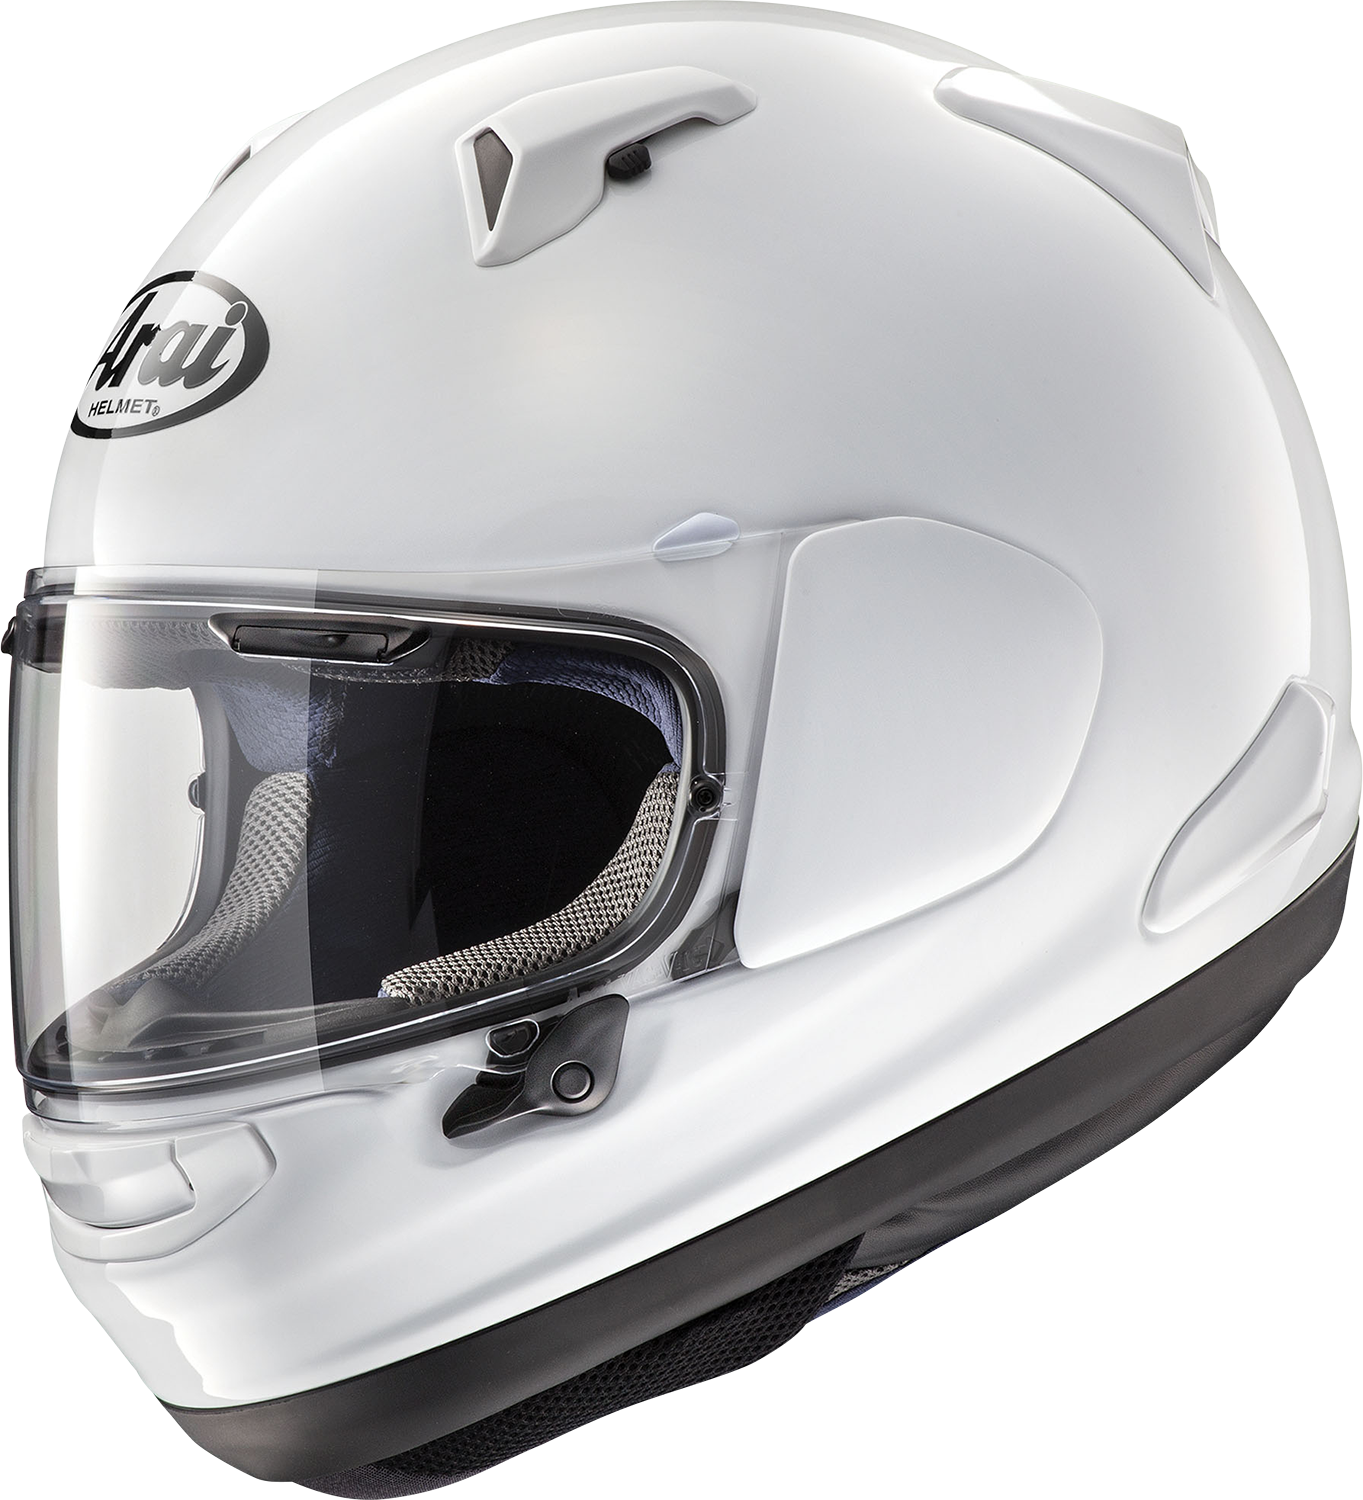 ARAI HELMETS Signet-X Helmet - White - XL 0101-15996